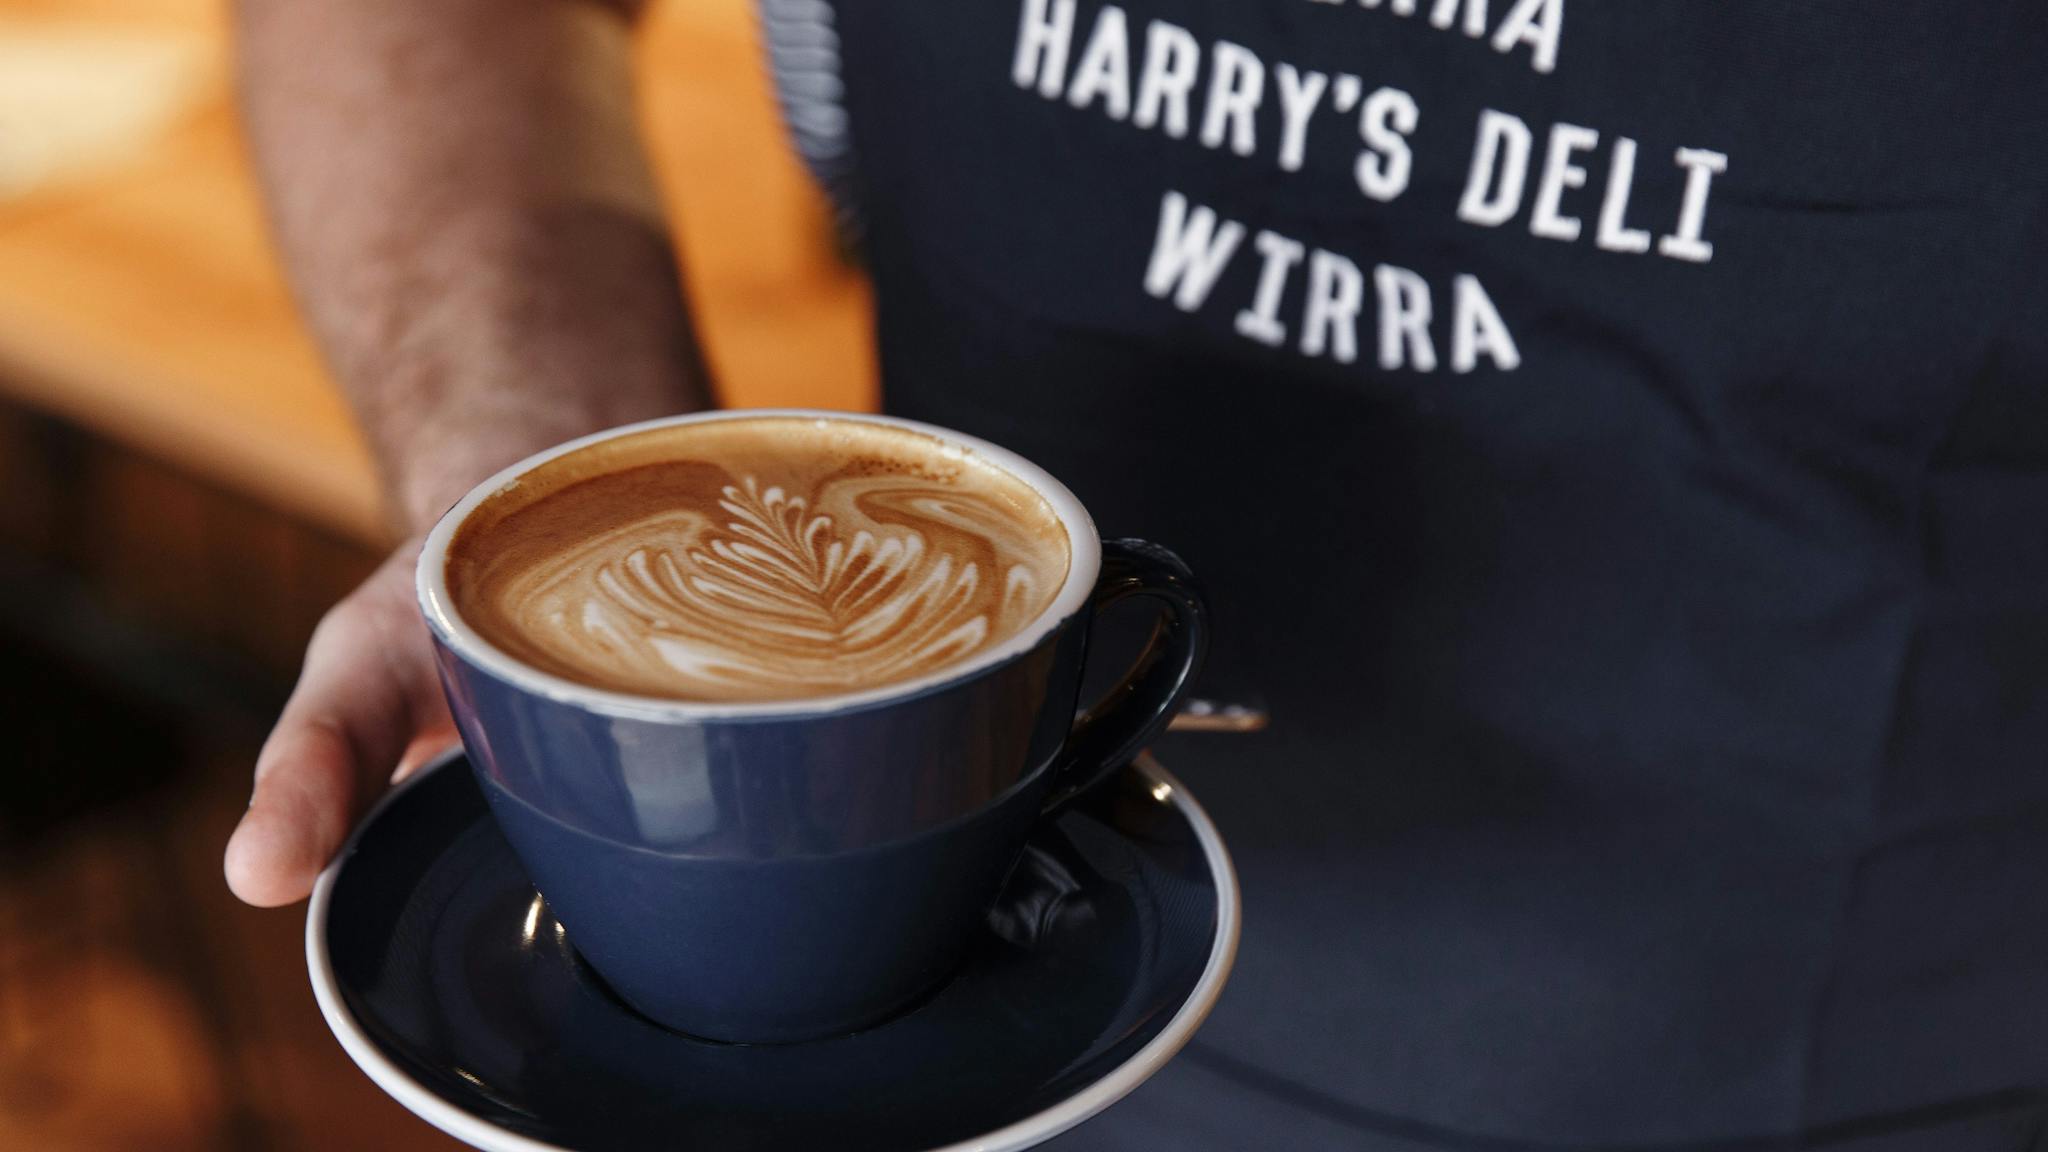 Coffee at Harry's Deli, Wirra Wirra